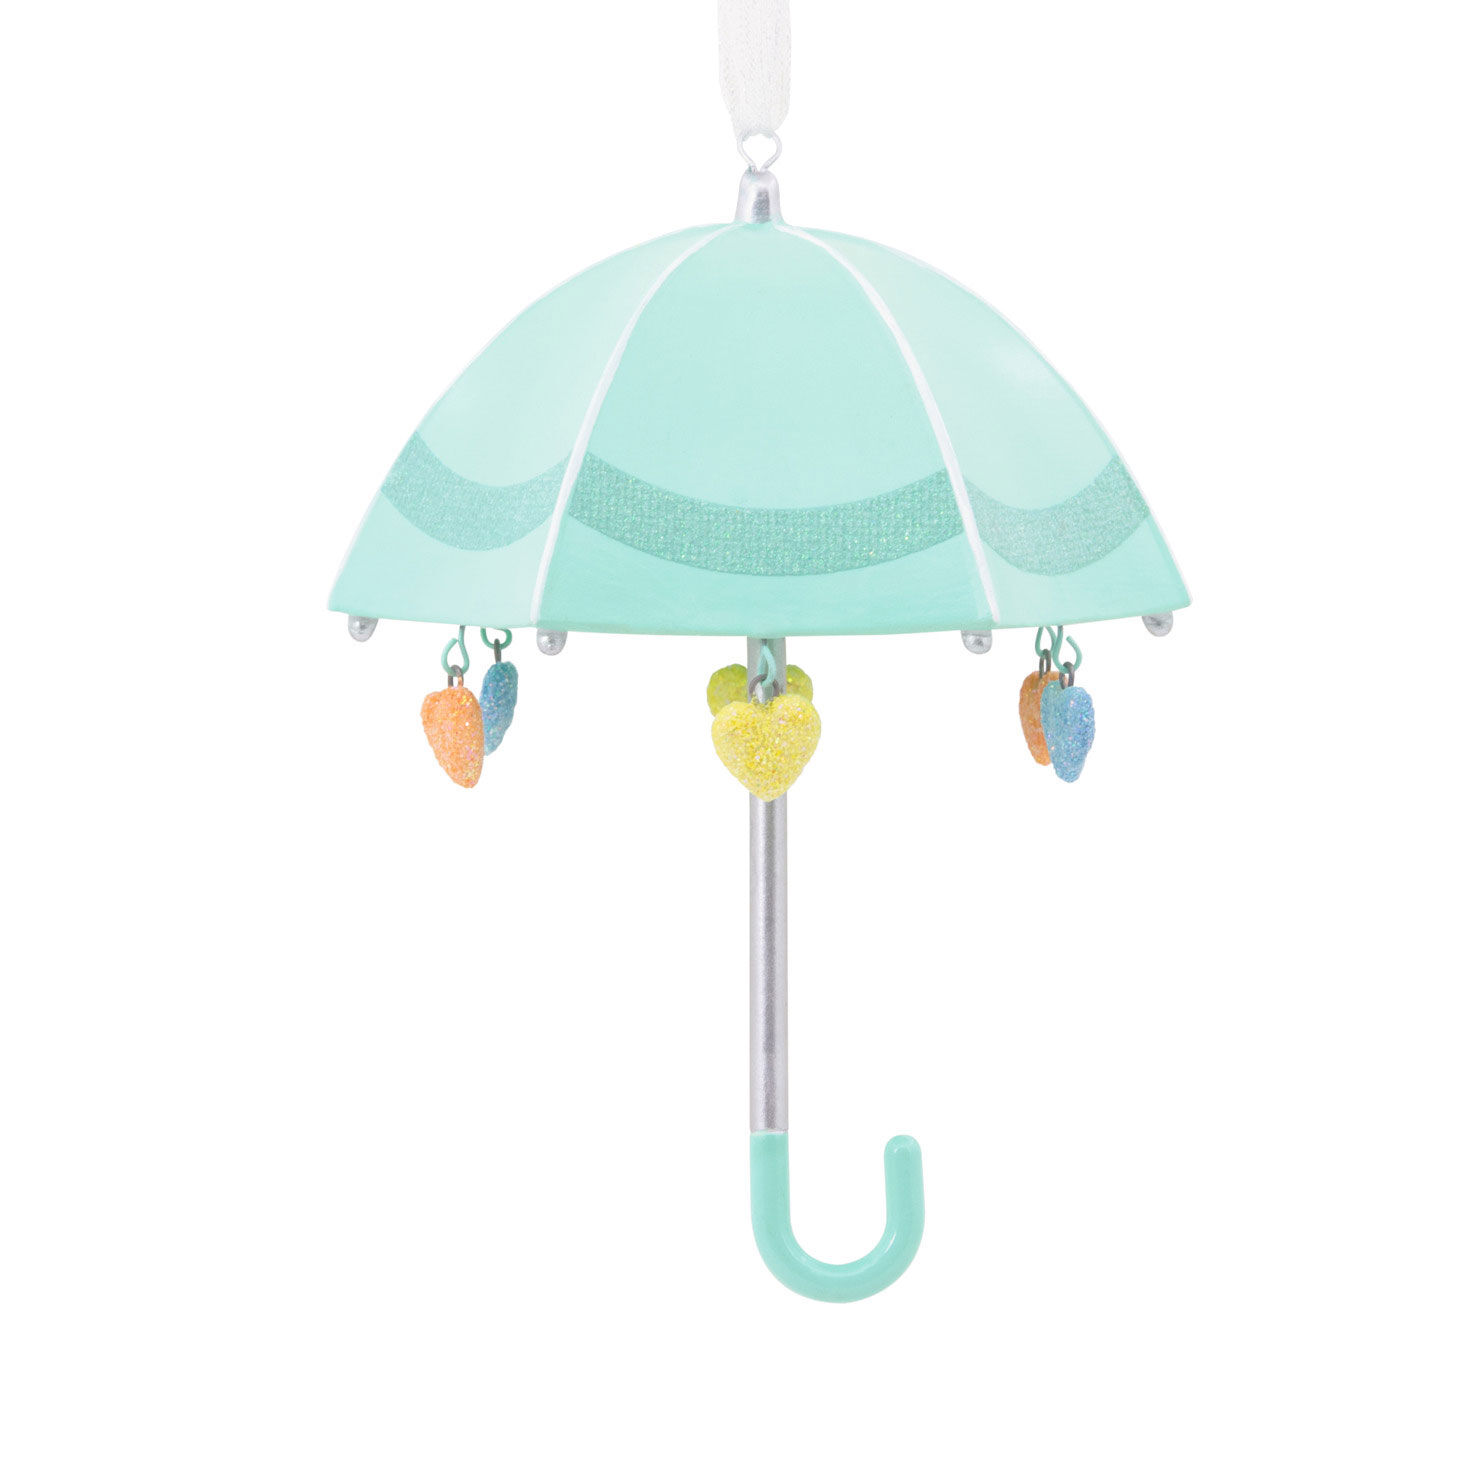 Signature Baby Umbrella Porcelain Hallmark Ornament for only USD 19.99 | Hallmark